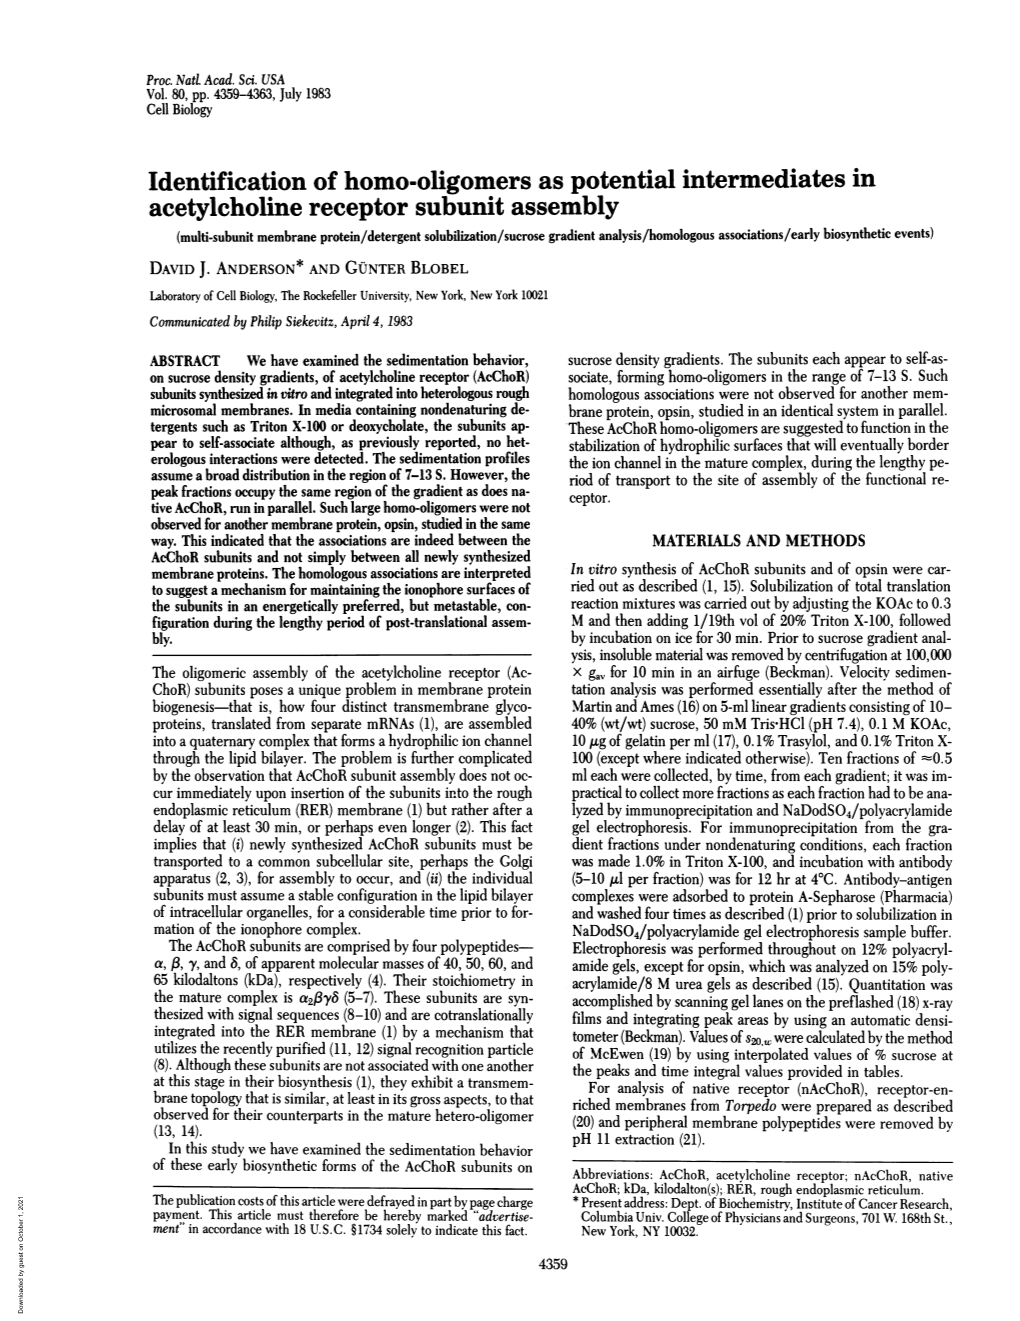 Identification of Homo-Oligomers As Potential Intermediates In